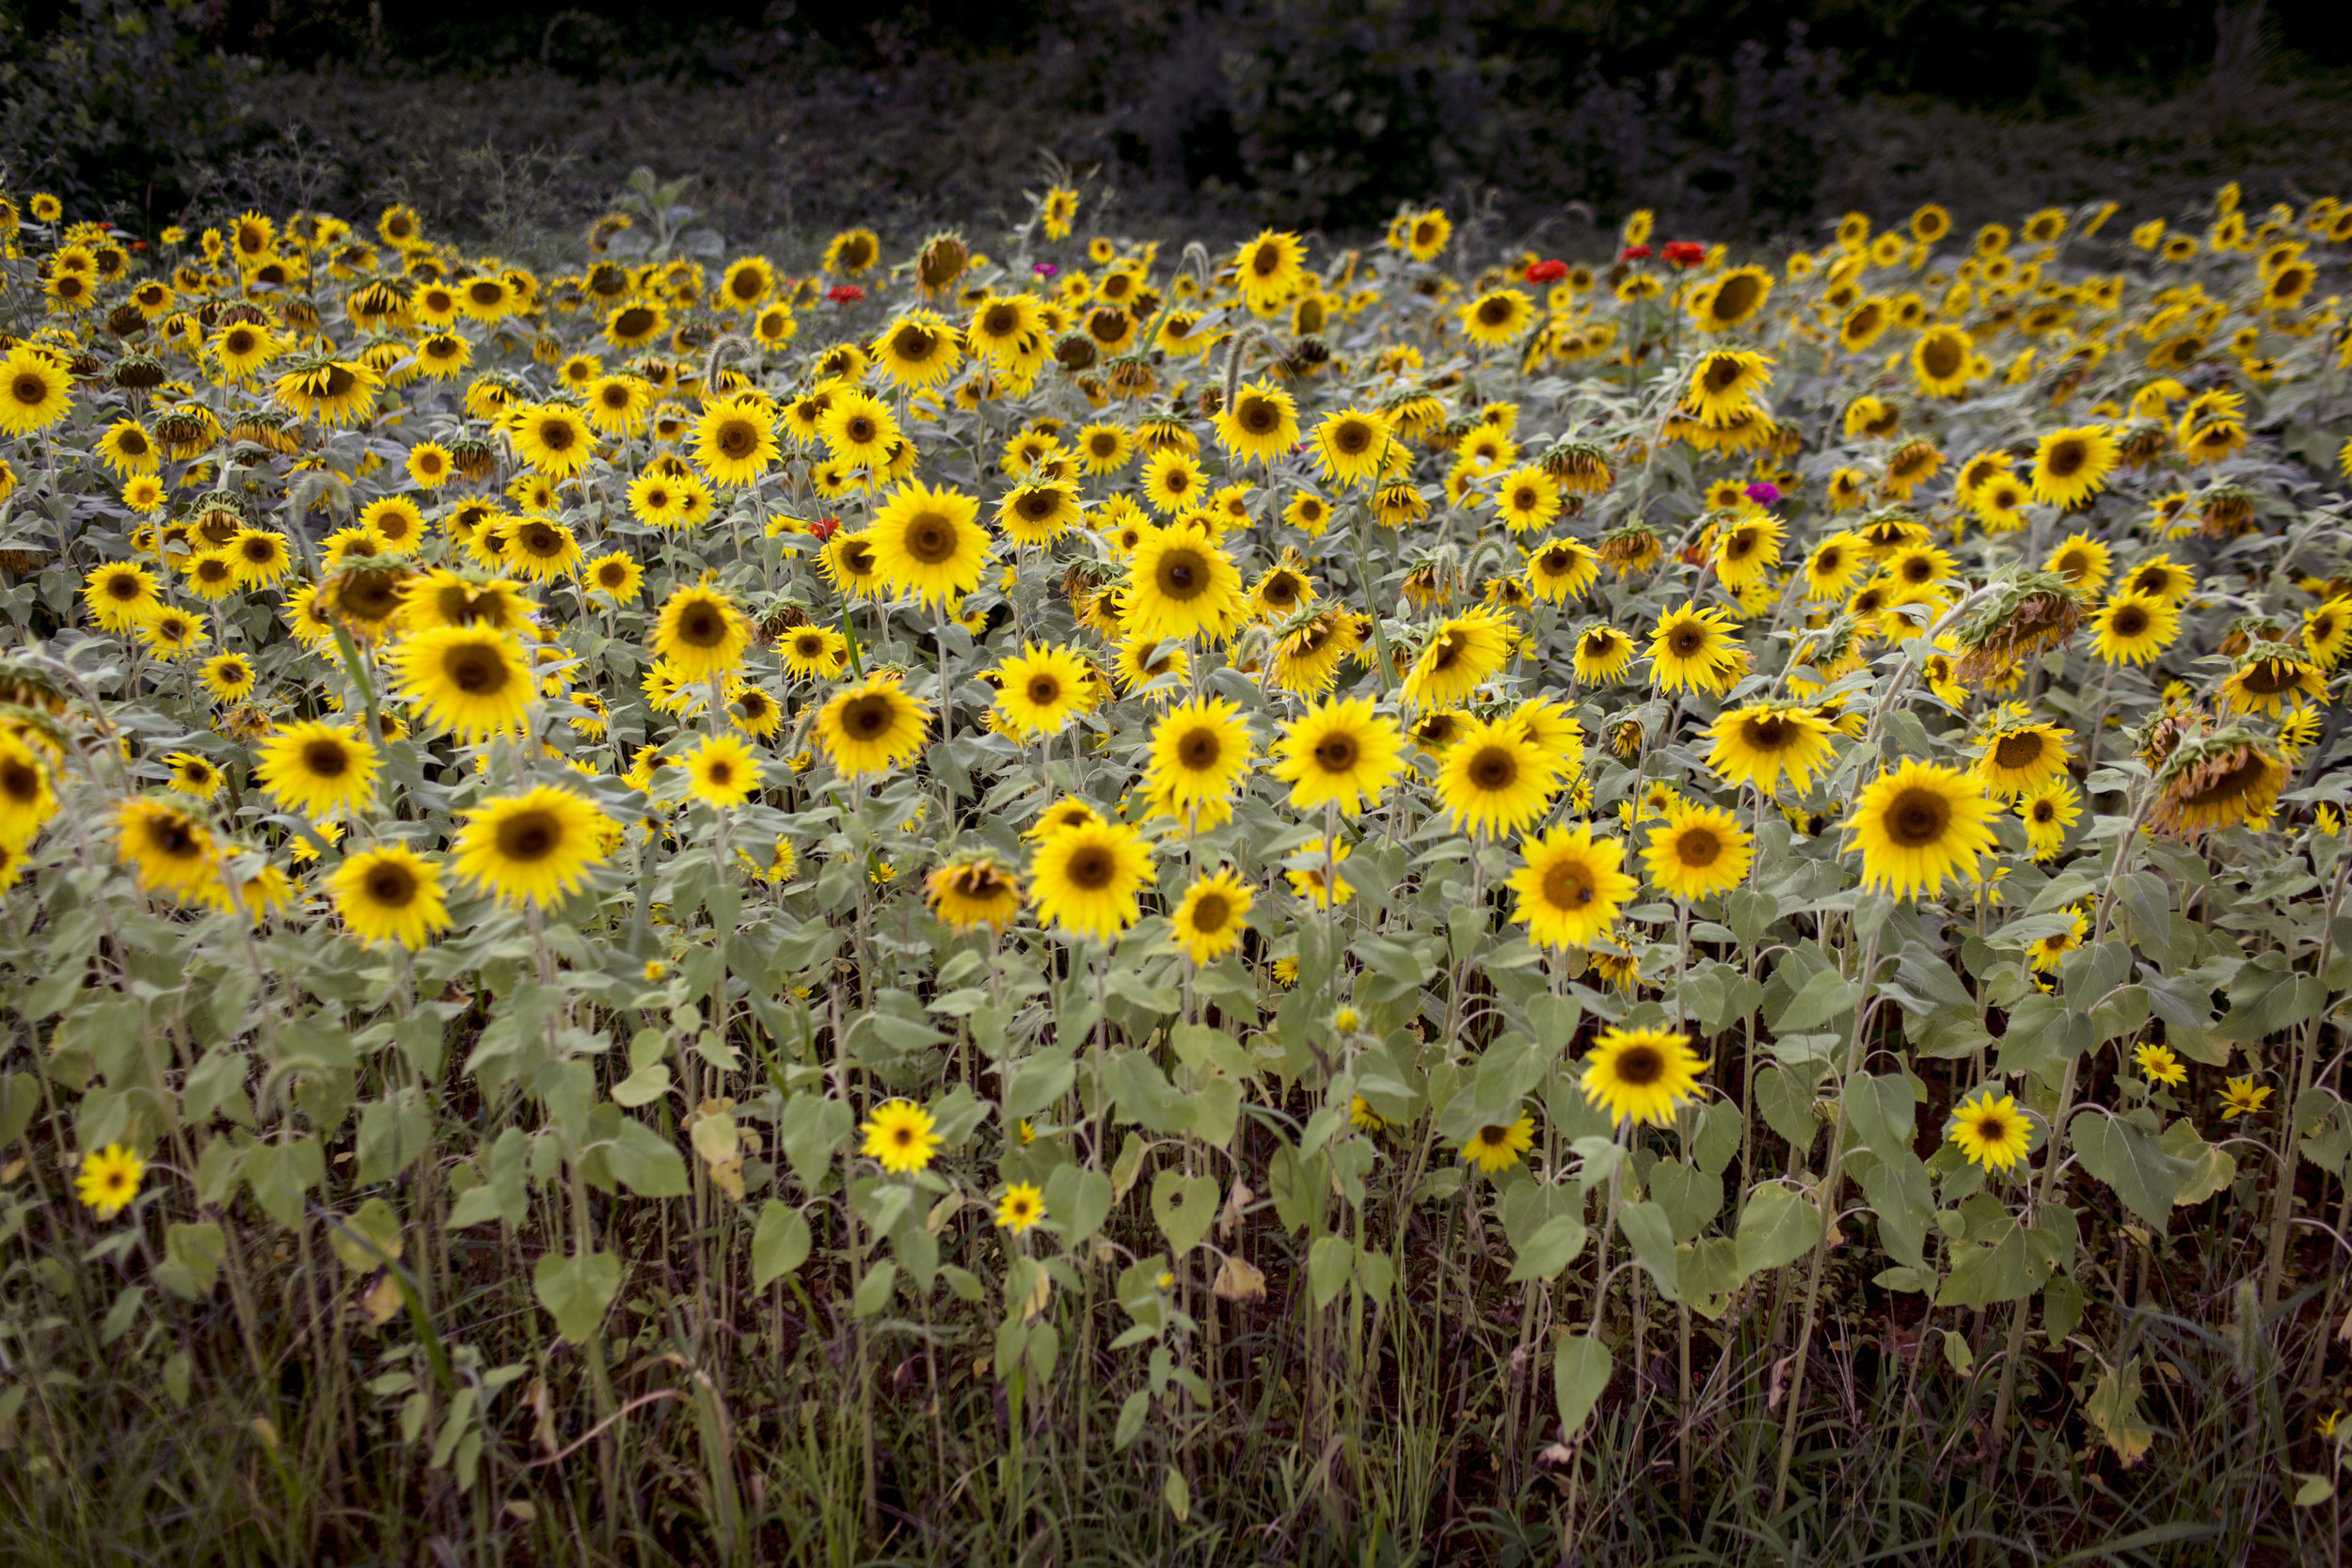 Harlan_sunflowers copy.jpg